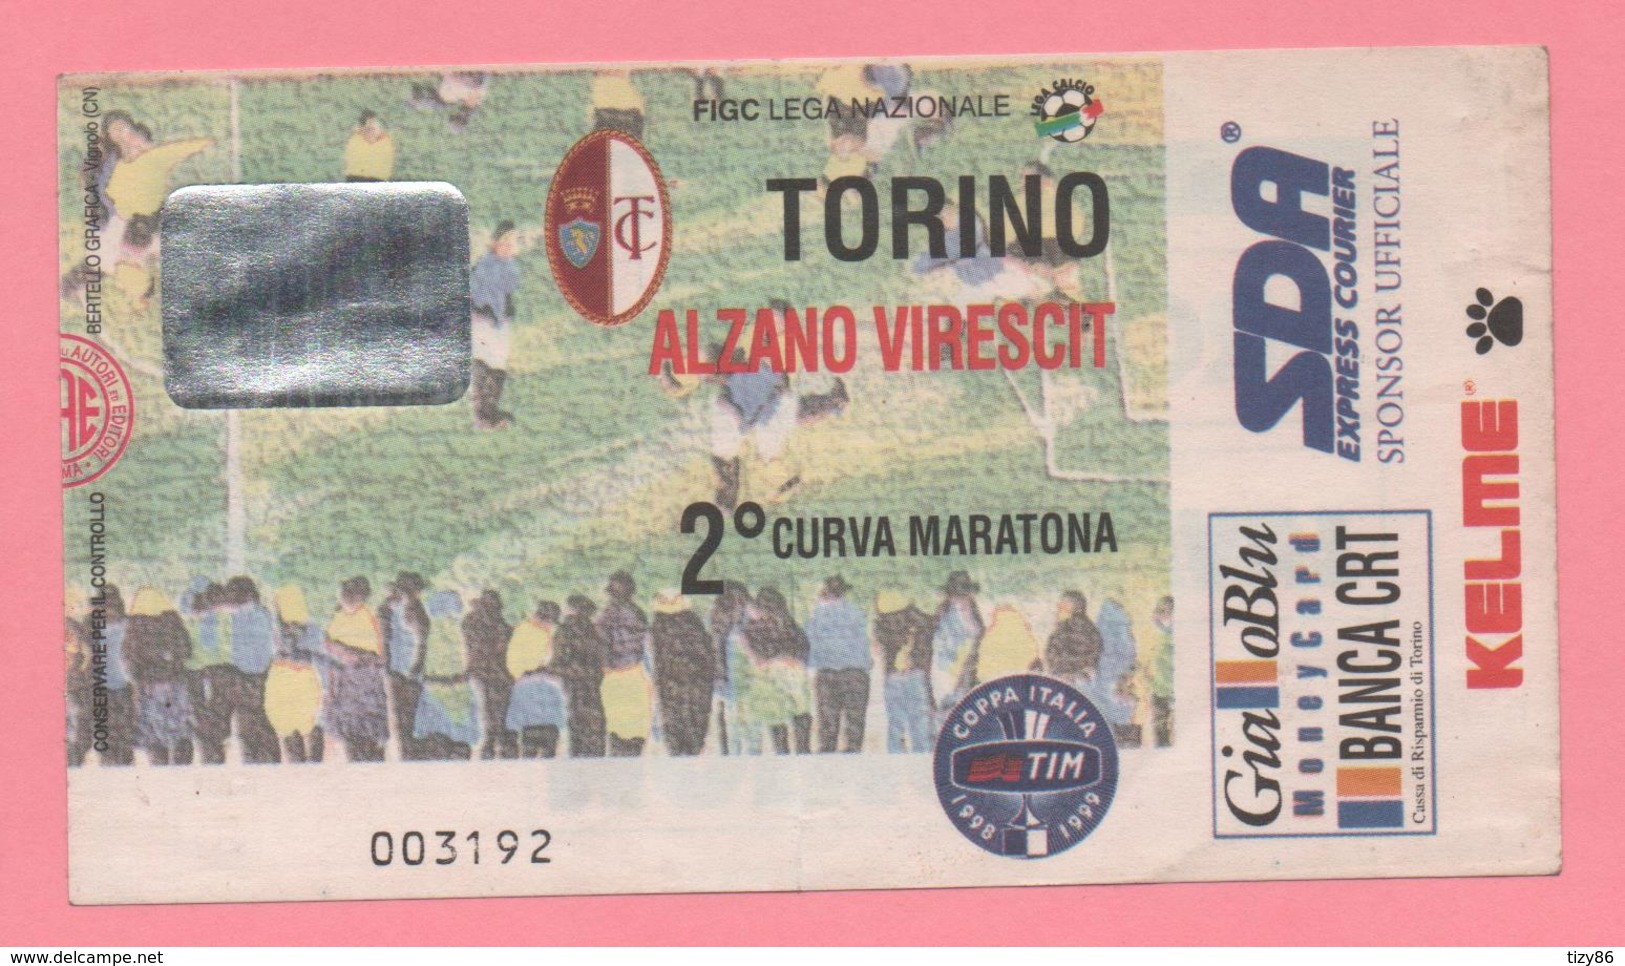 Biglietto D'ingresso Torino Alzano Virescit - Biglietti D'ingresso